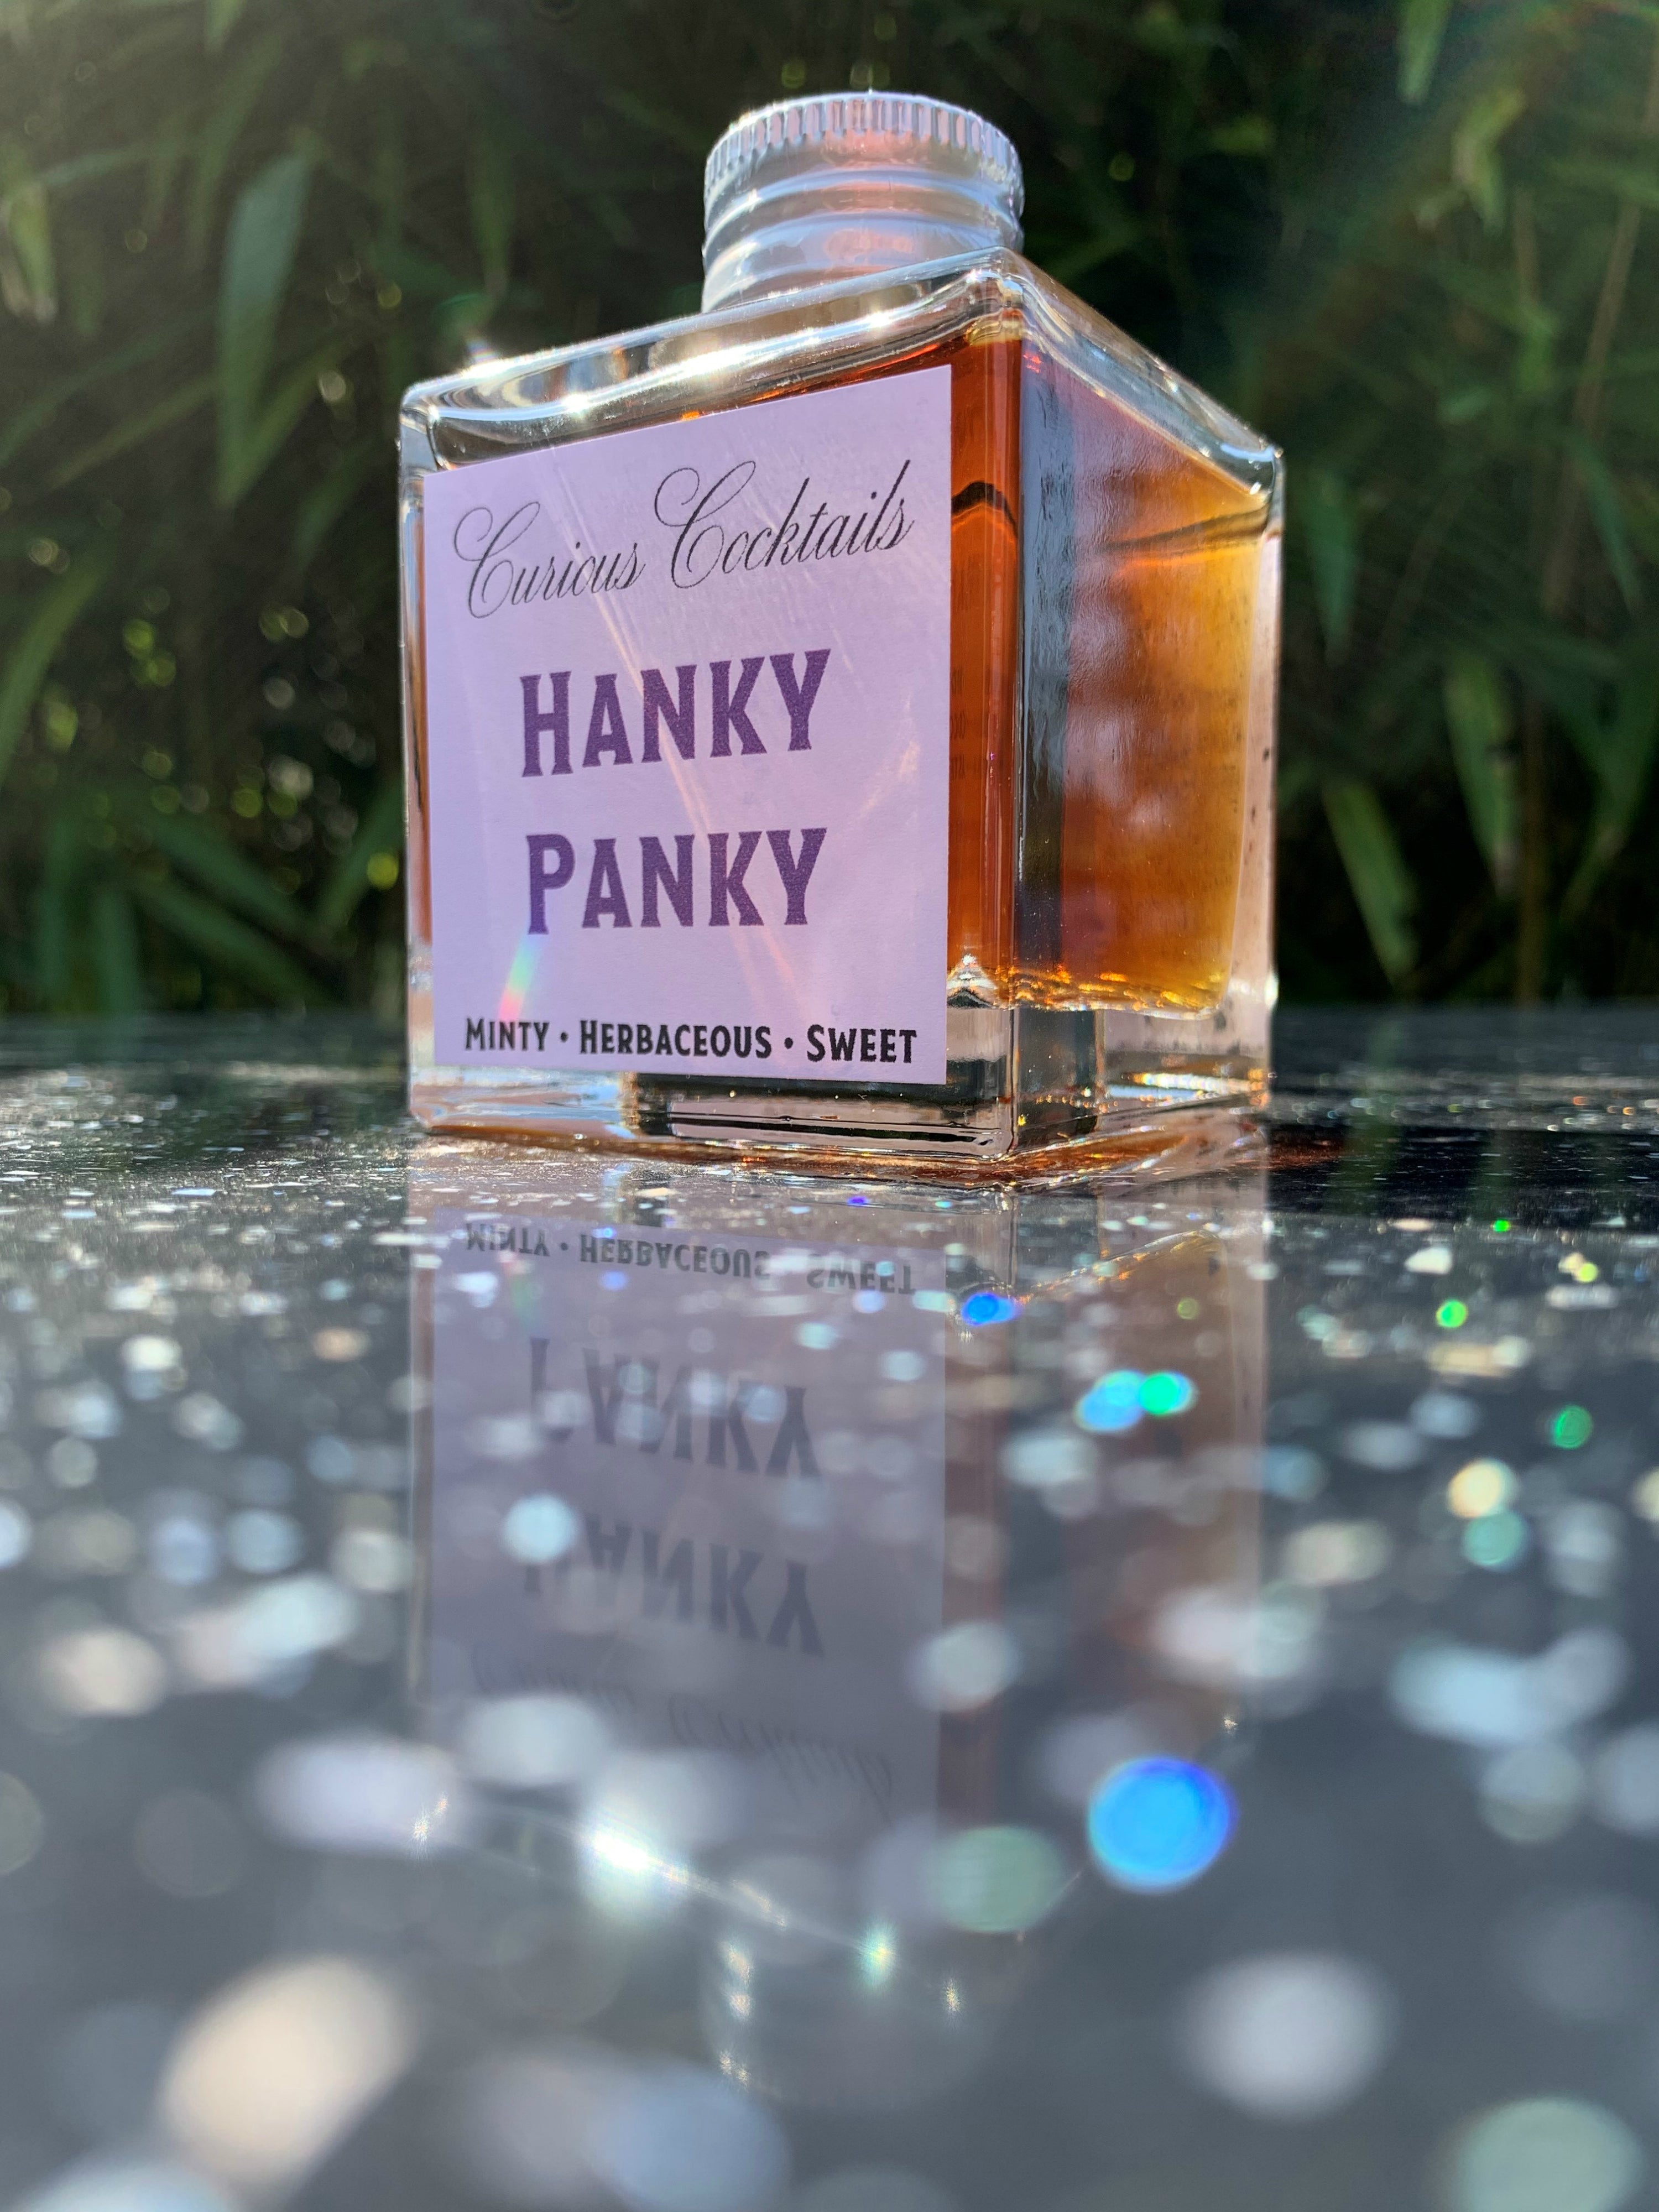 Curious Cocktails: Hanky Panky